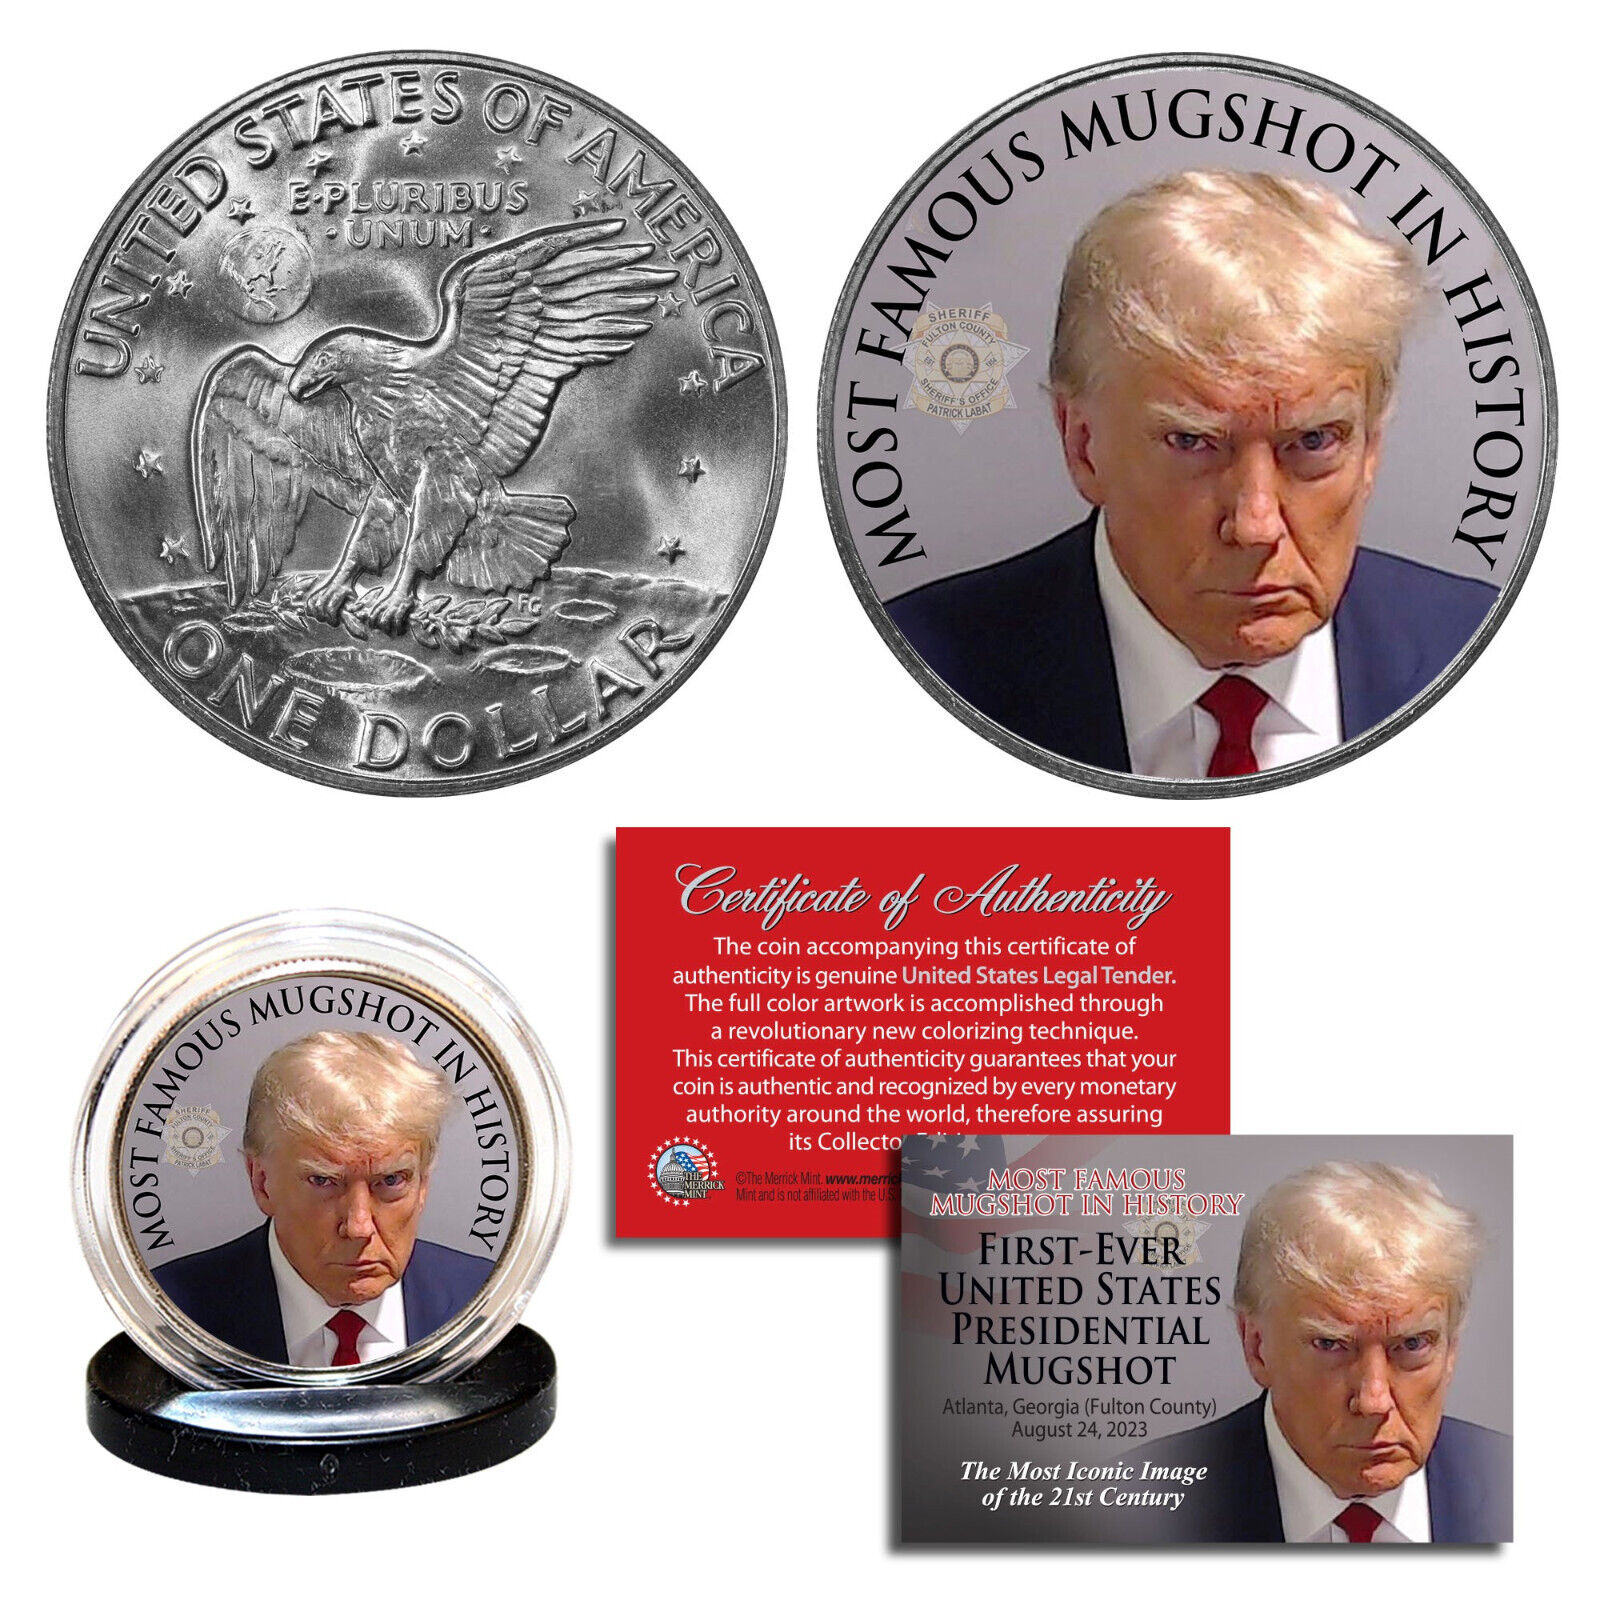 DONALD TRUMP 45th President MUGSHOT Photo Official Legal Tender IKE $1 U.S. Coin